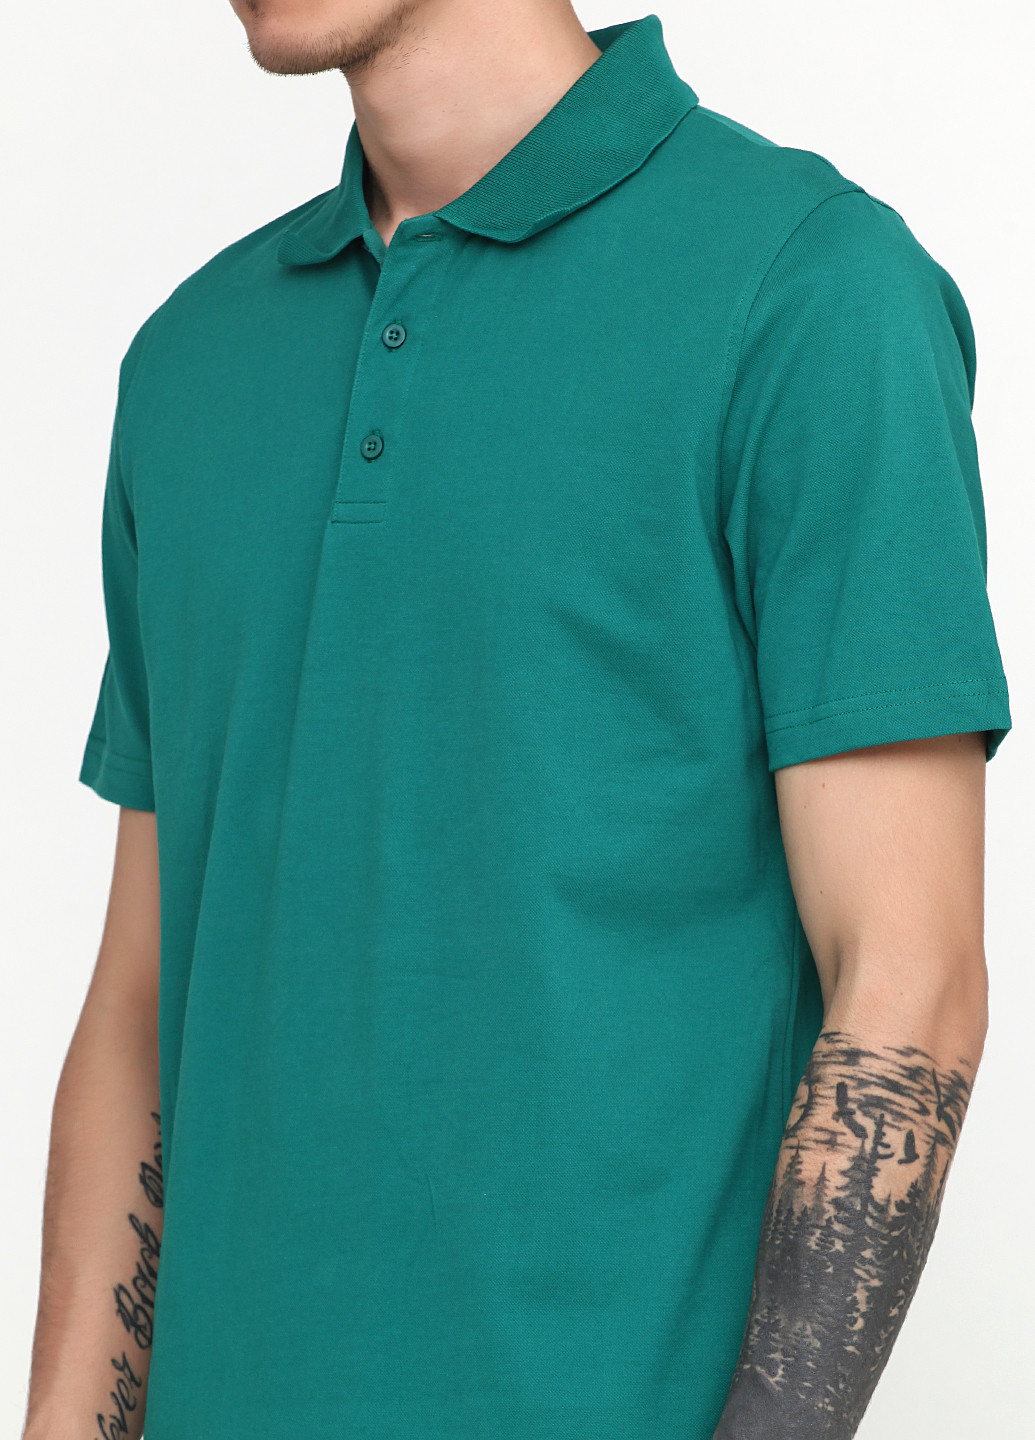 Зеленая футболка-поло для мужчин Belika однотонная